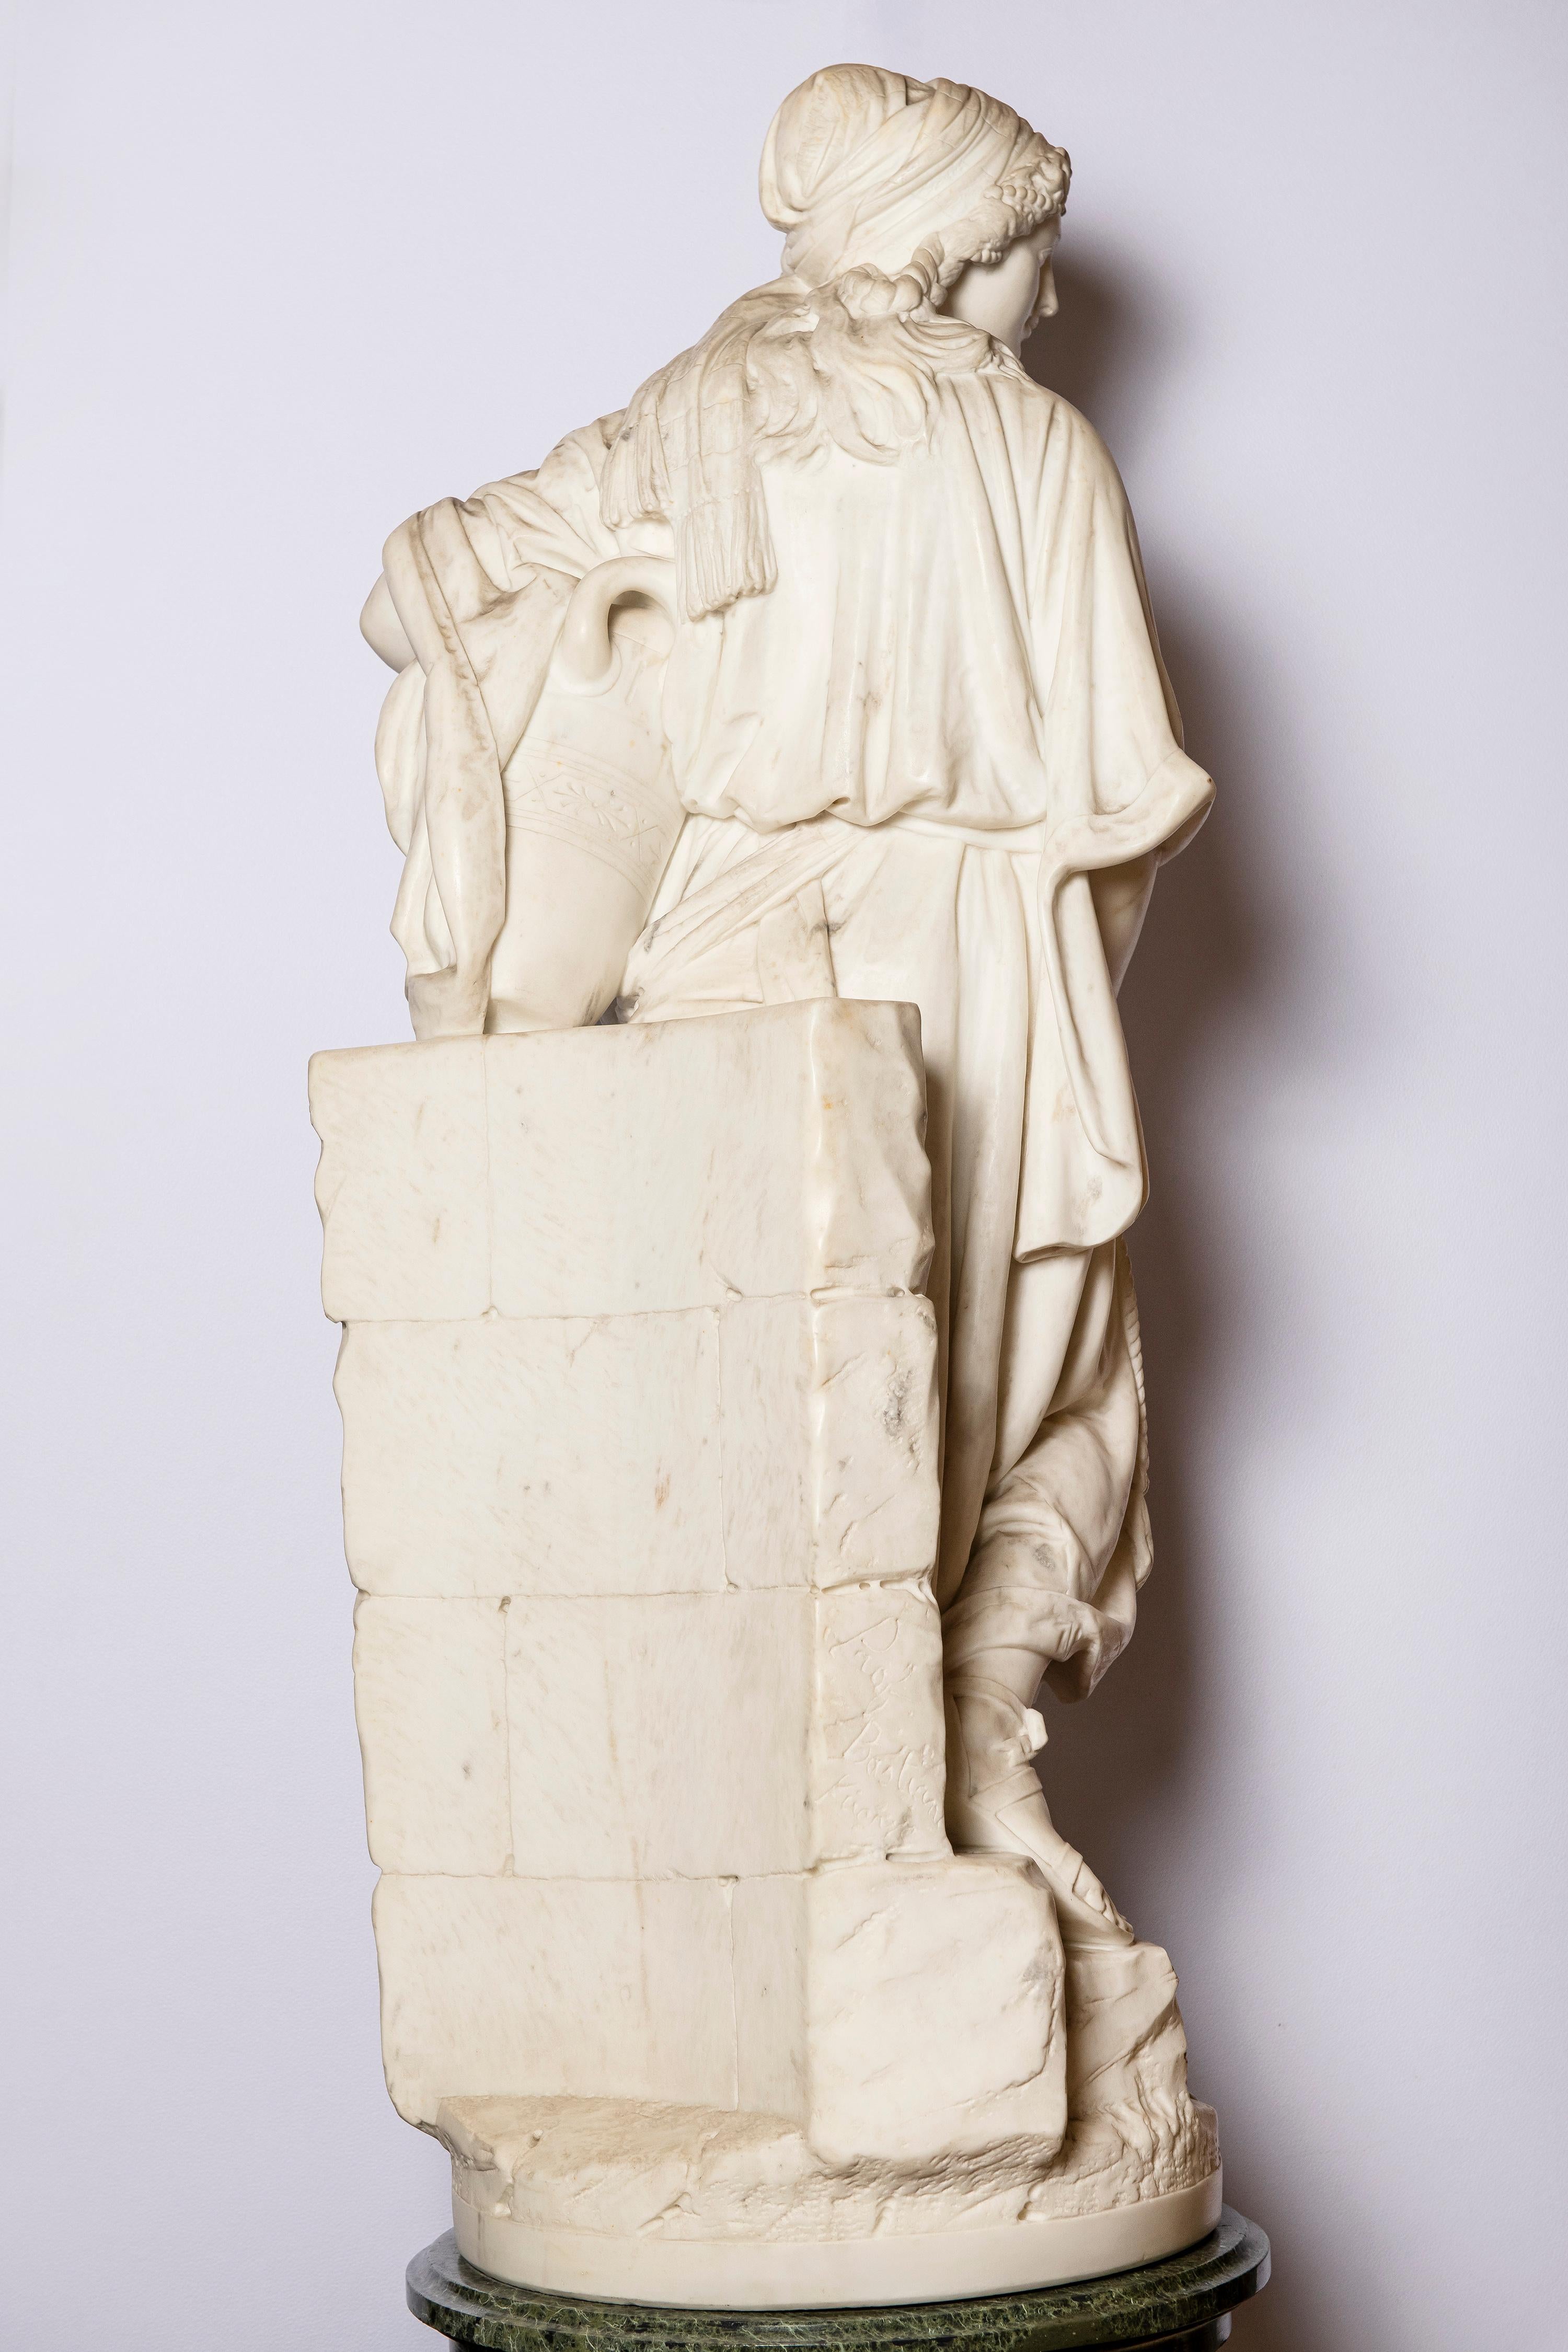 Carrara marble sculpture signed Prof. Bastiani Firenze, Italy, circa 1890. 
By Ildebrando Bastiani.